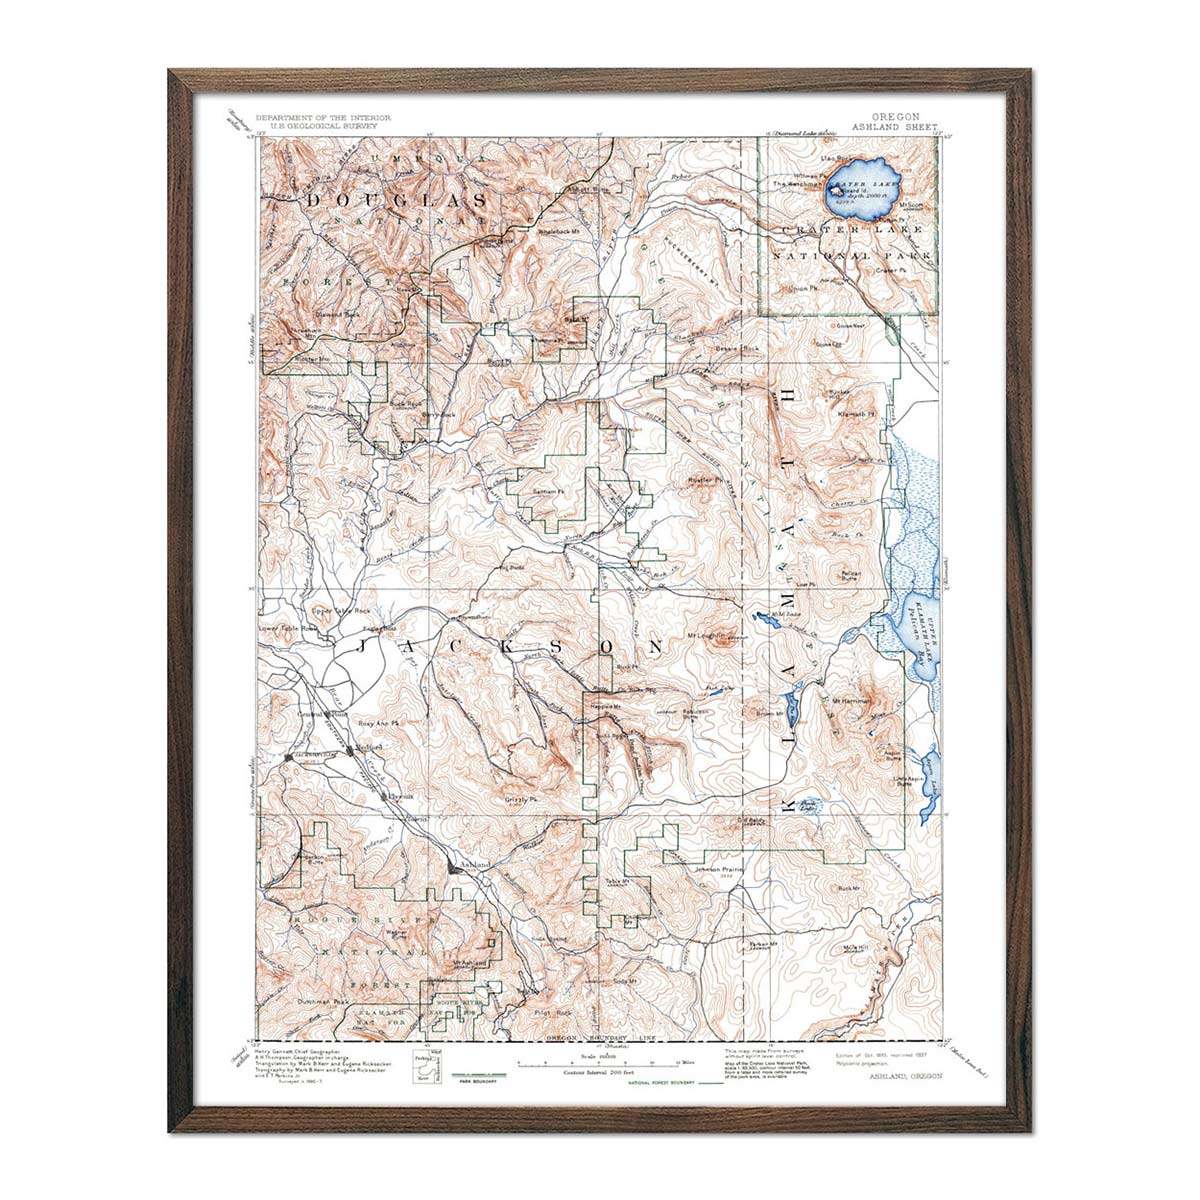 Crater Lake National Park Map 1937